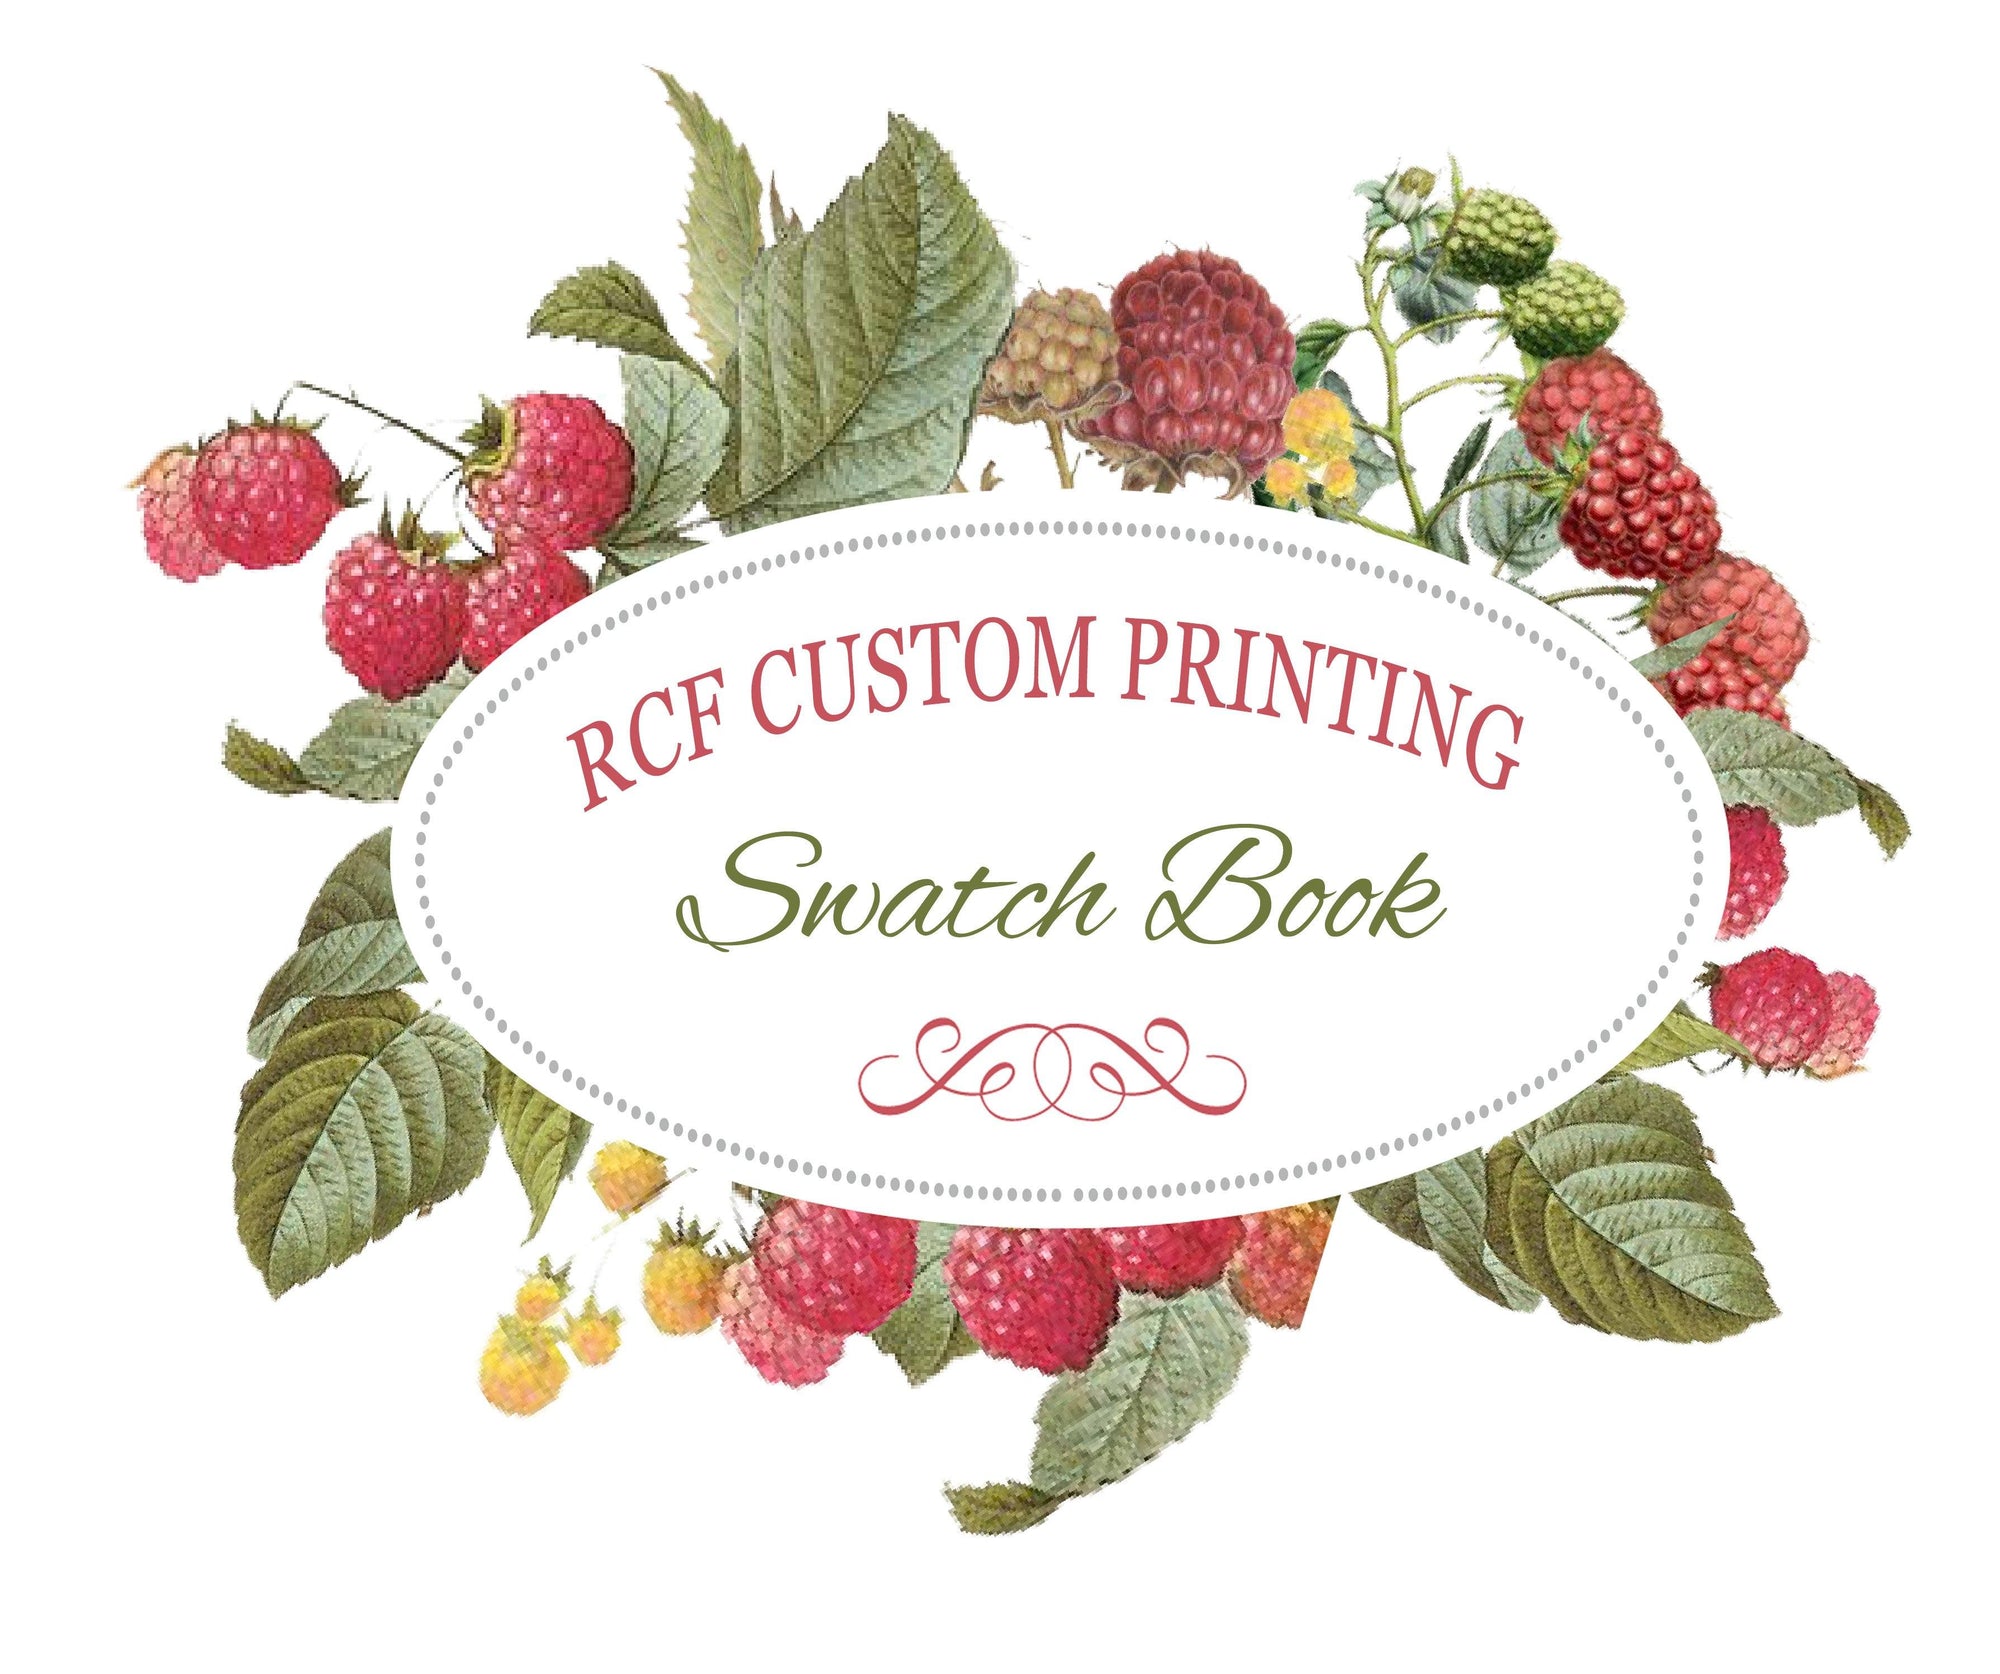 Custom Printing Base Fabric Swatch Book Fabric, Raspberry Creek Fabrics, watermarked, restored